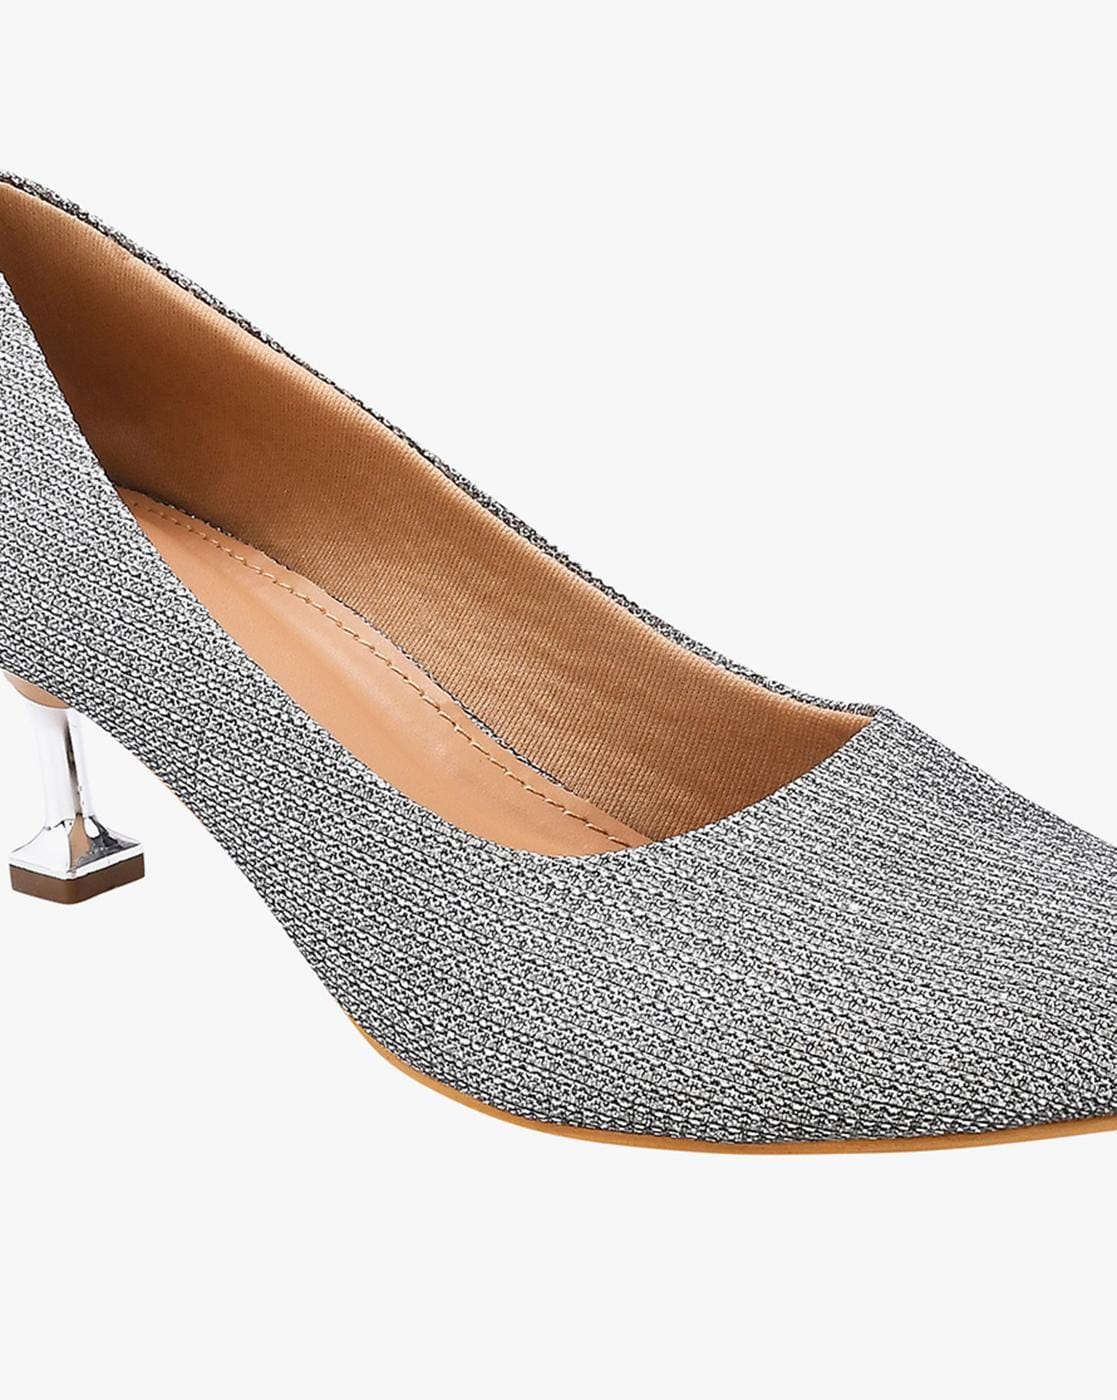 Fashion Ladies Platform High Heel Fashion Sandals Low Heel Women's Shoes- Silver | Jumia Nigeria